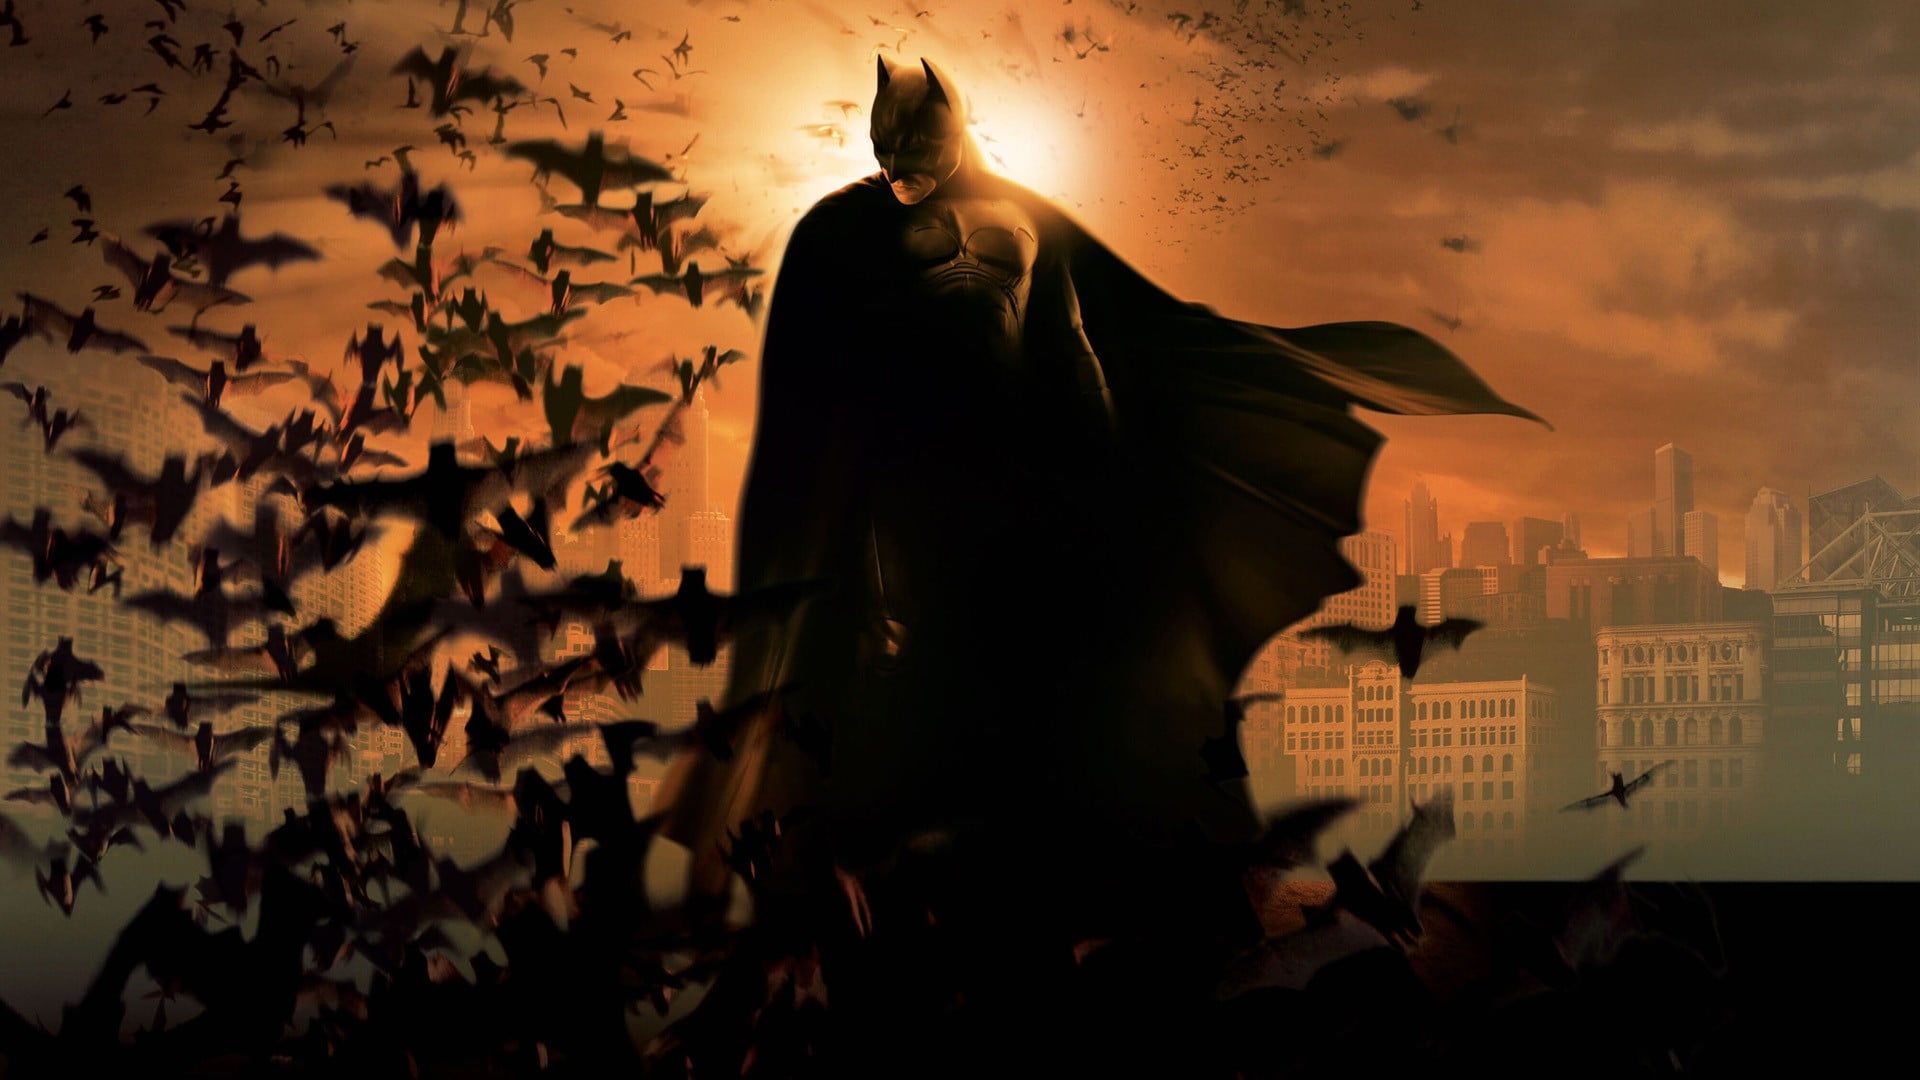 Batman #movies #Batman The Dark Knight Batman Begins P #wallpaper #hdwallpaper #desktop. Batman, HD wallpaper, Marvel wallpaper